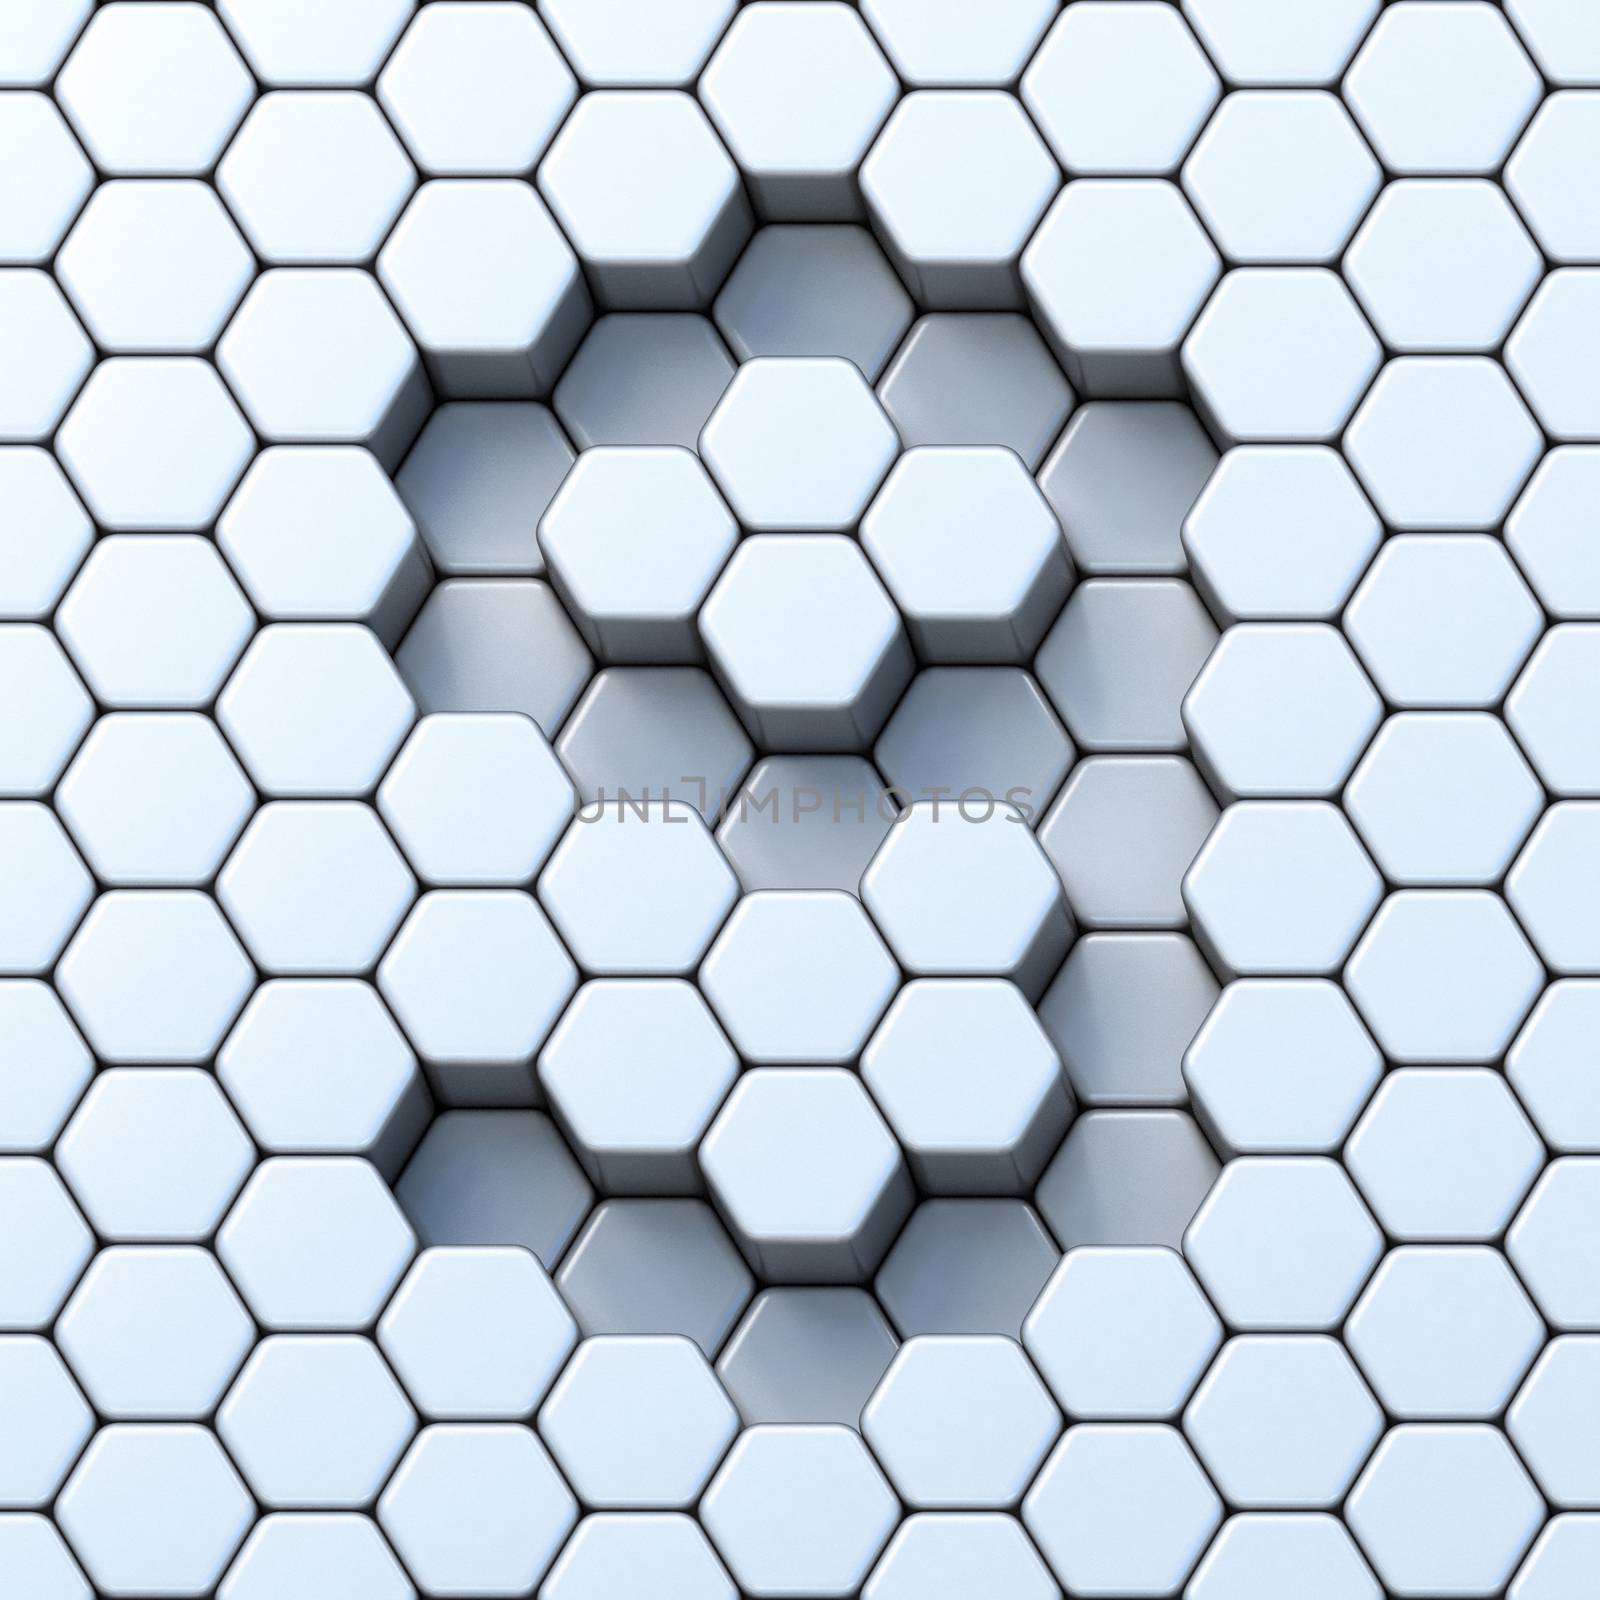 Hexagonal grid number NINE 9 3D by djmilic